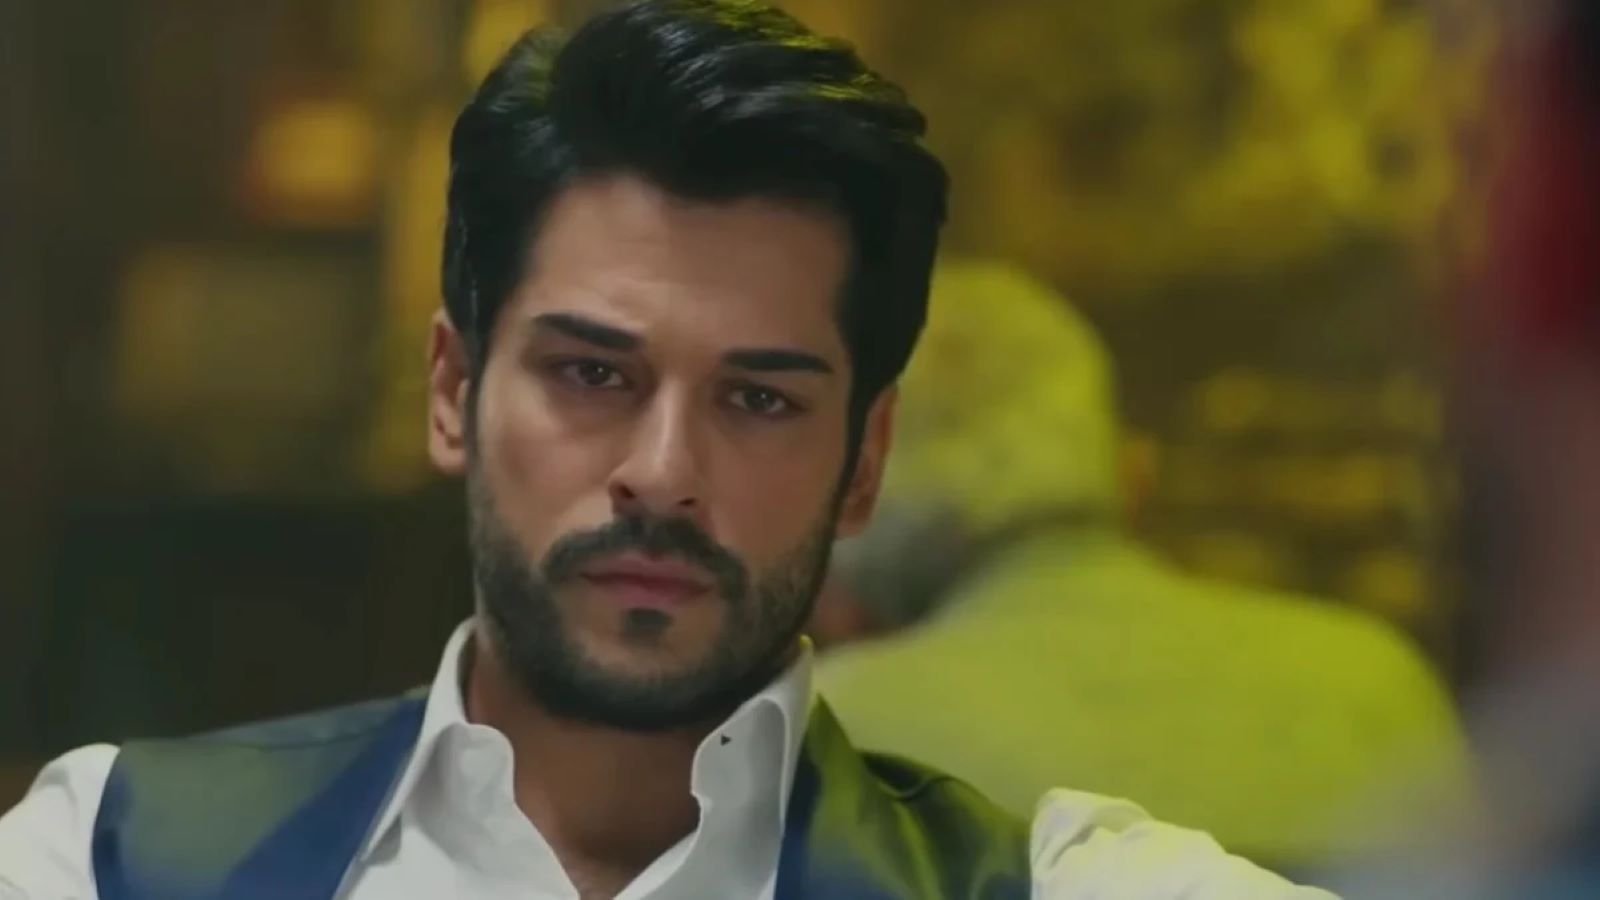 Kemal nella soap turca è interpretato da Burak Özçivit